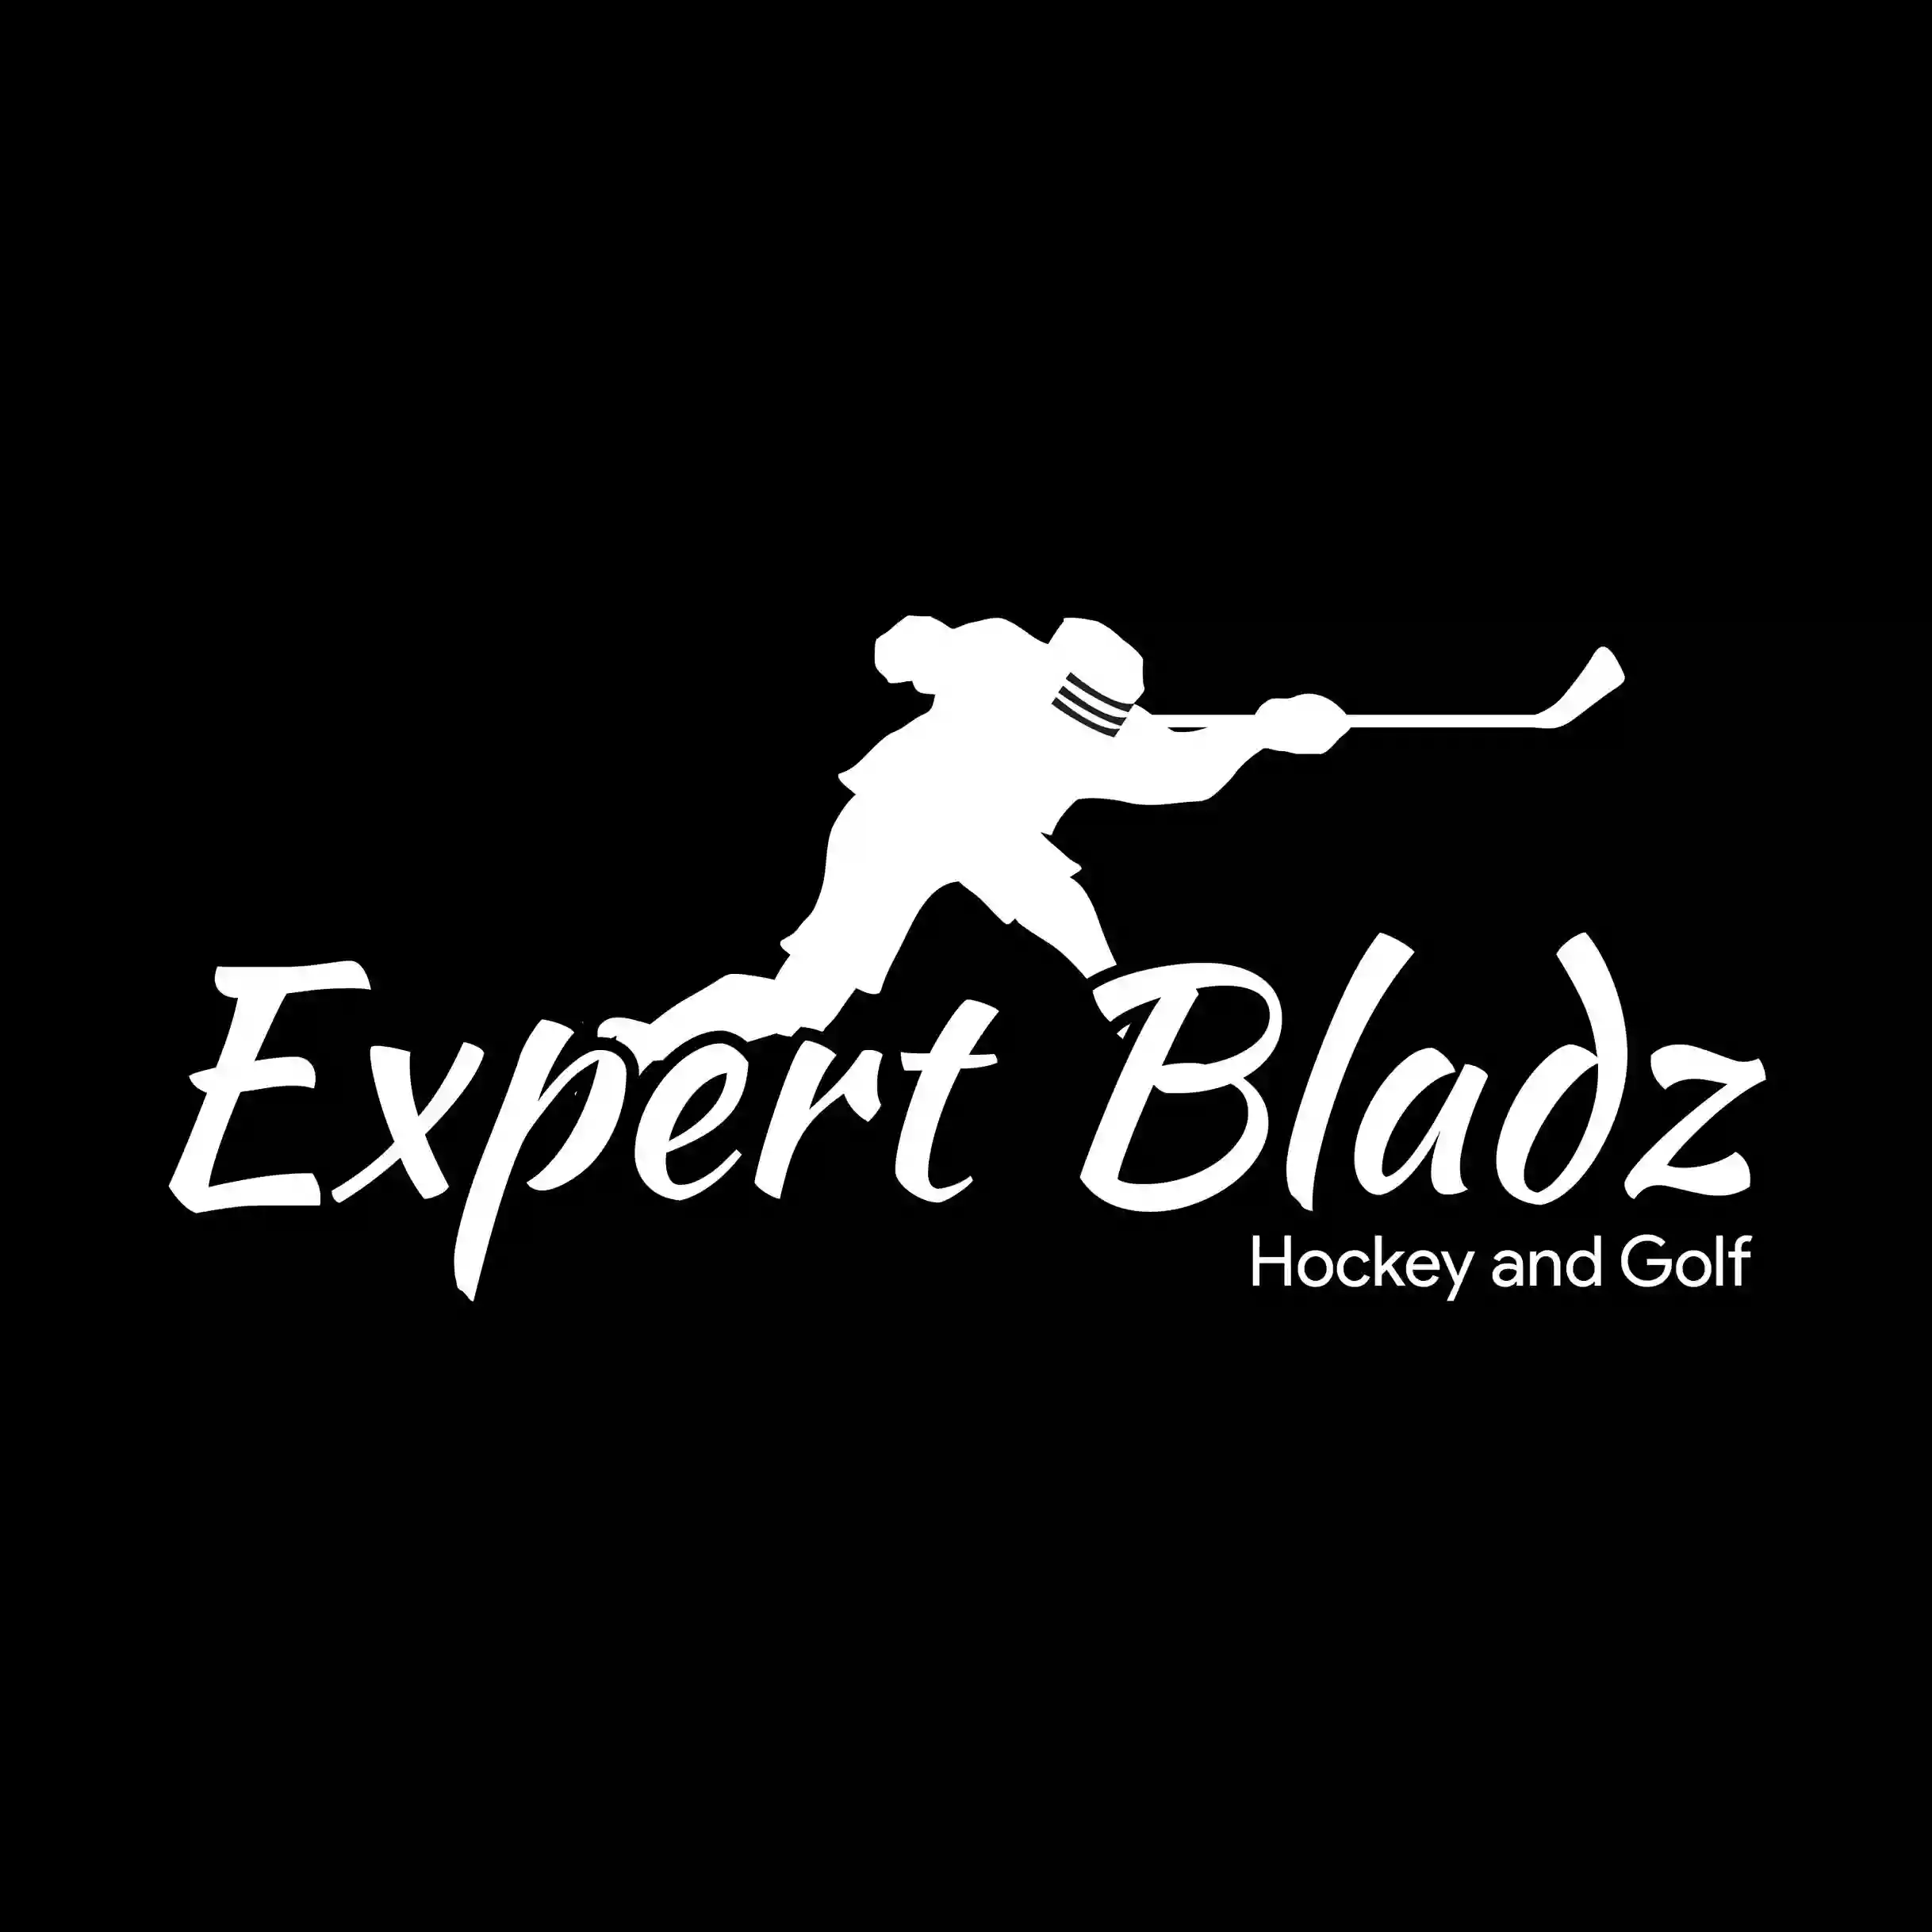 Expert Bladz